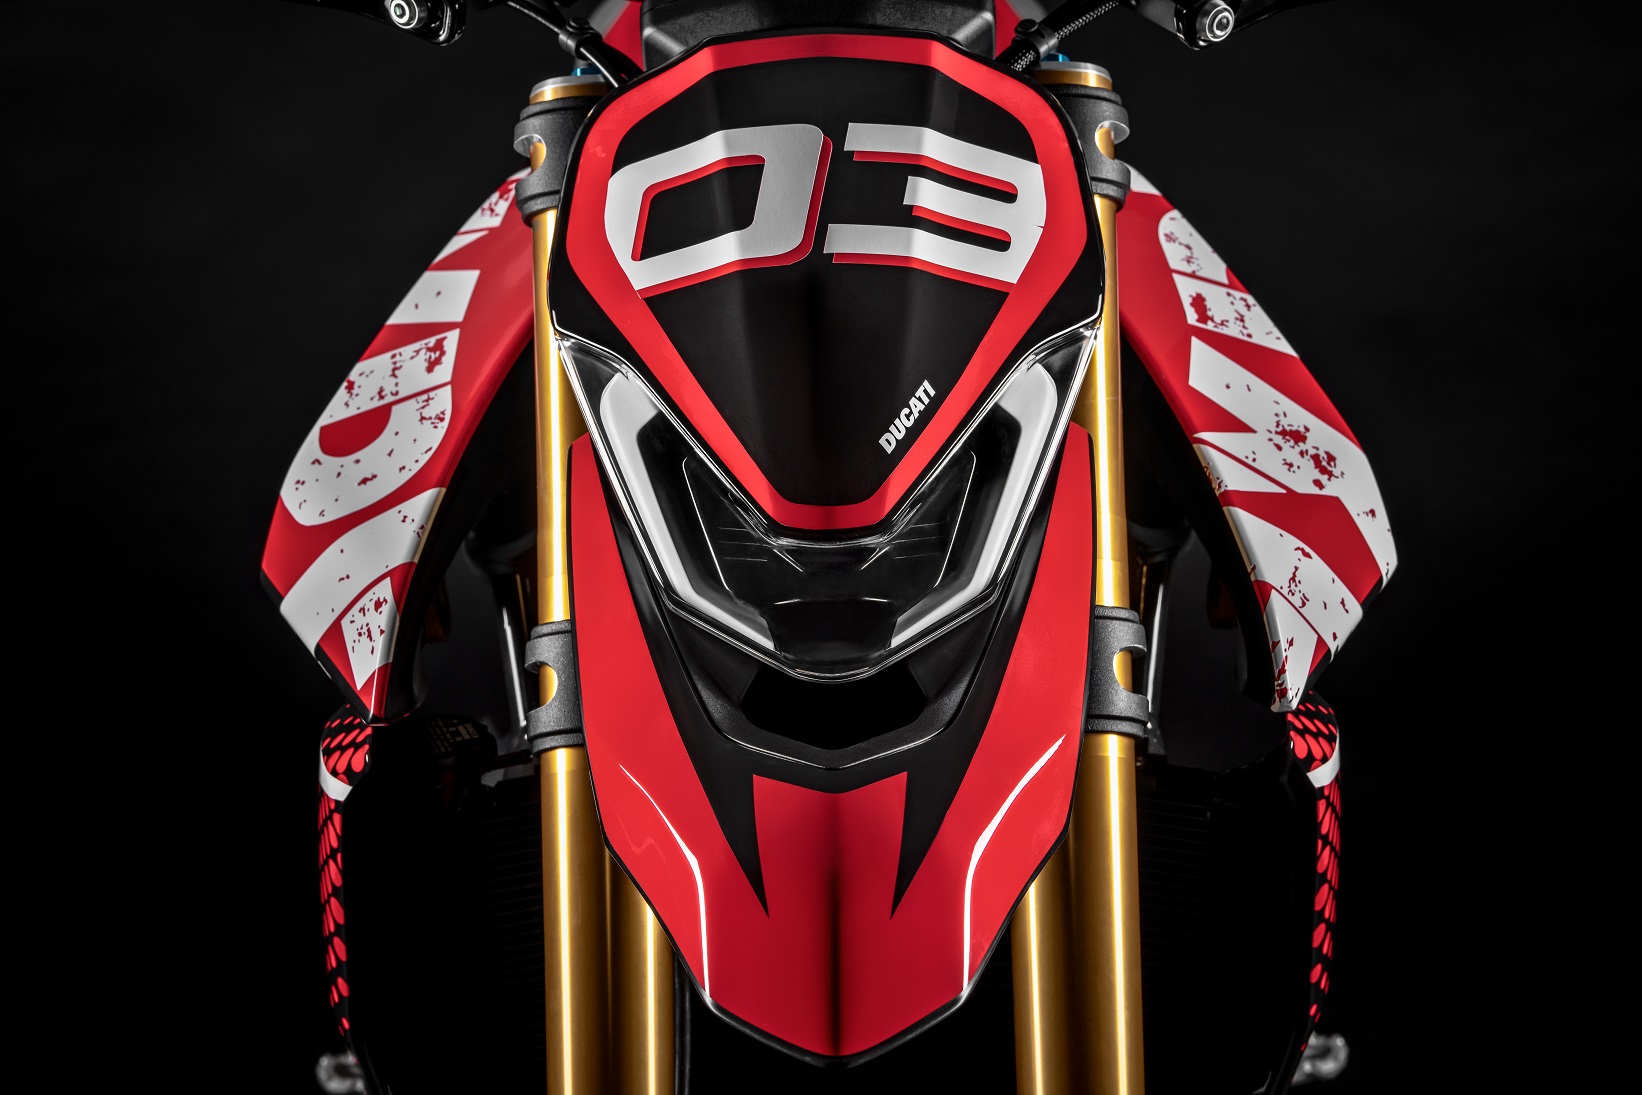 Ducati_Hypermotard-950-Concept-uae-dubai